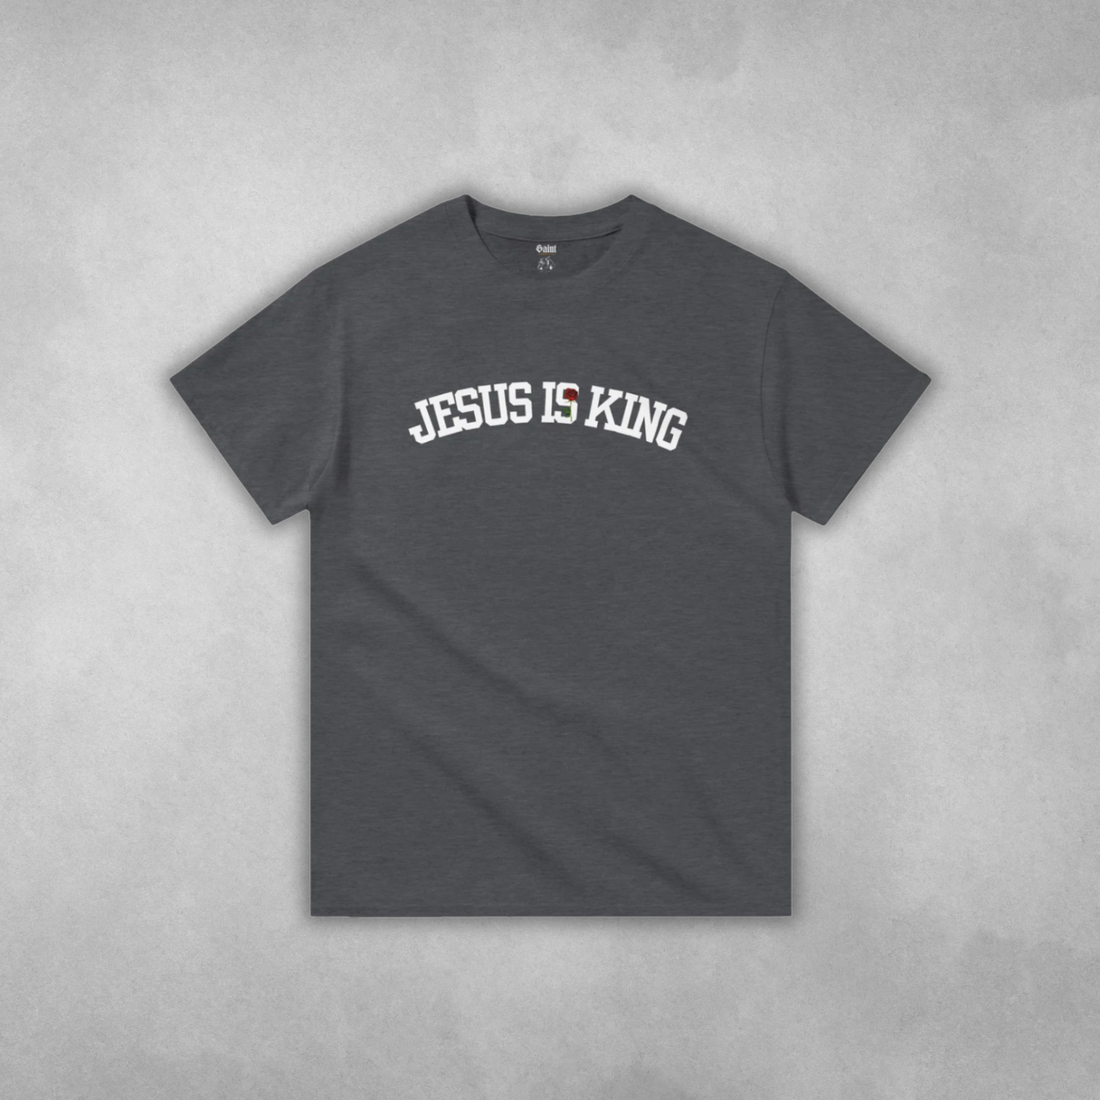 Jesus is King - Dark Grey Unisex Tshirt